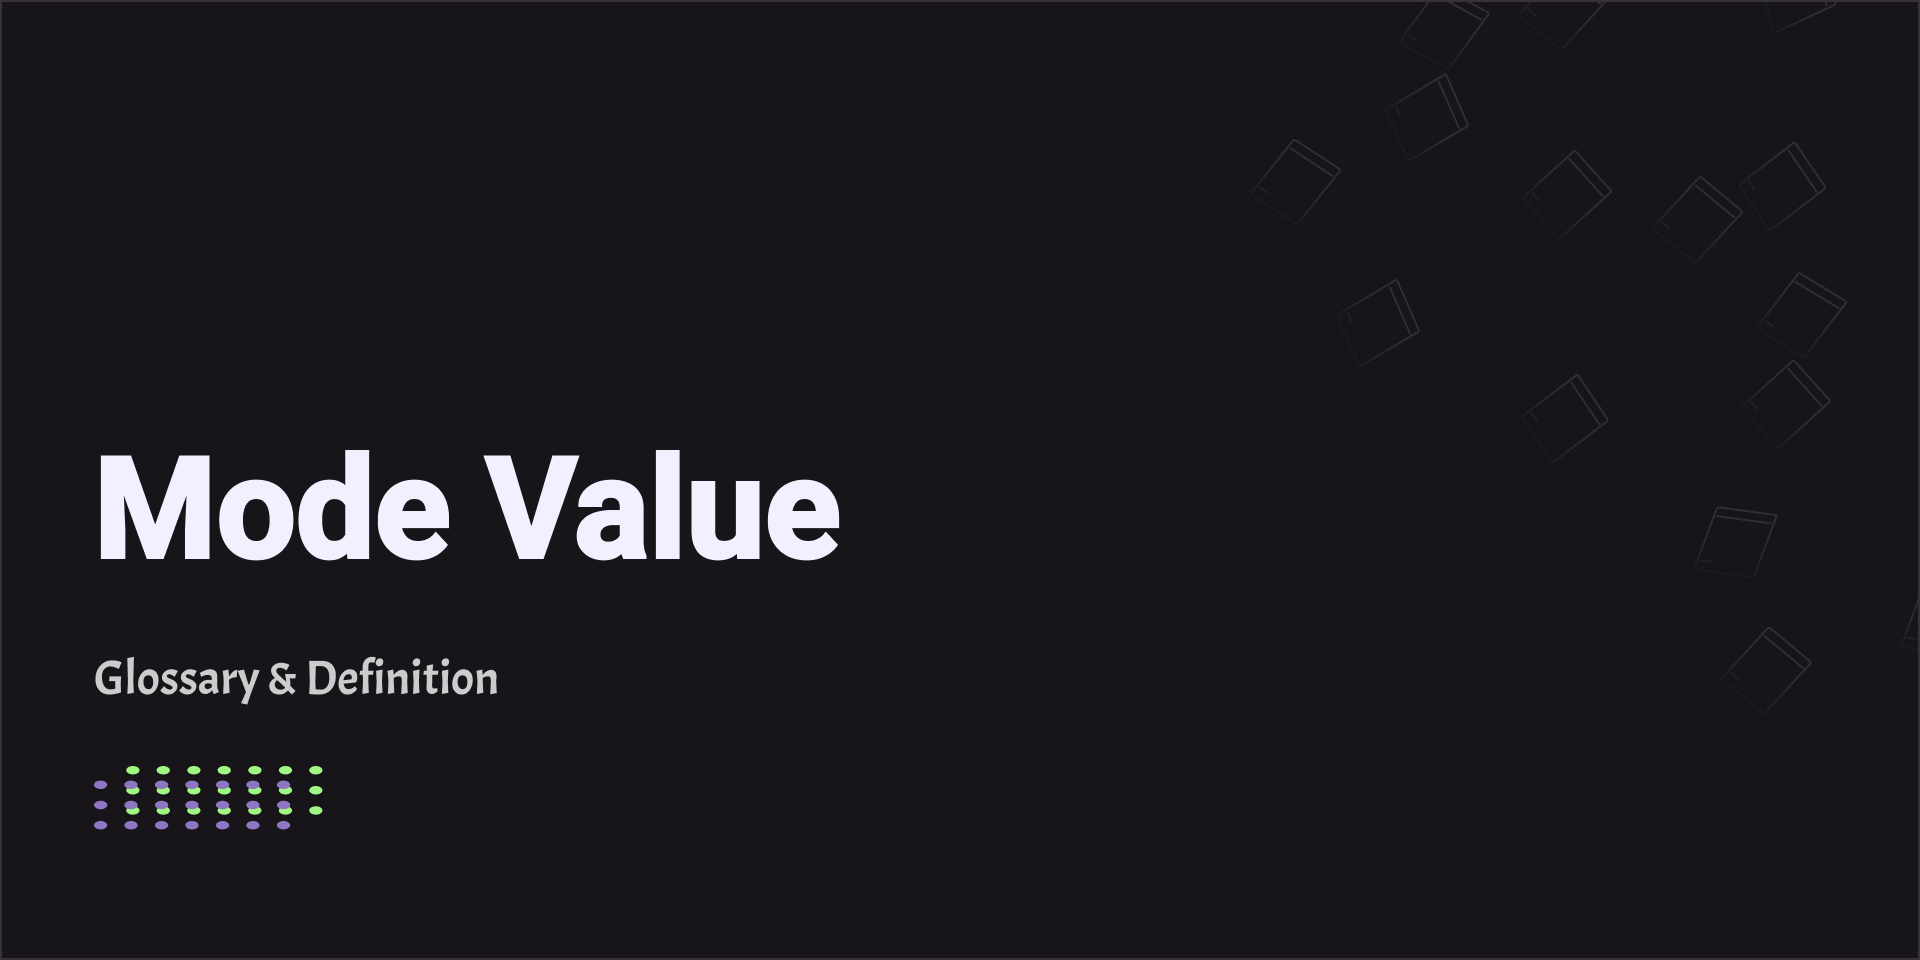 Mode Value